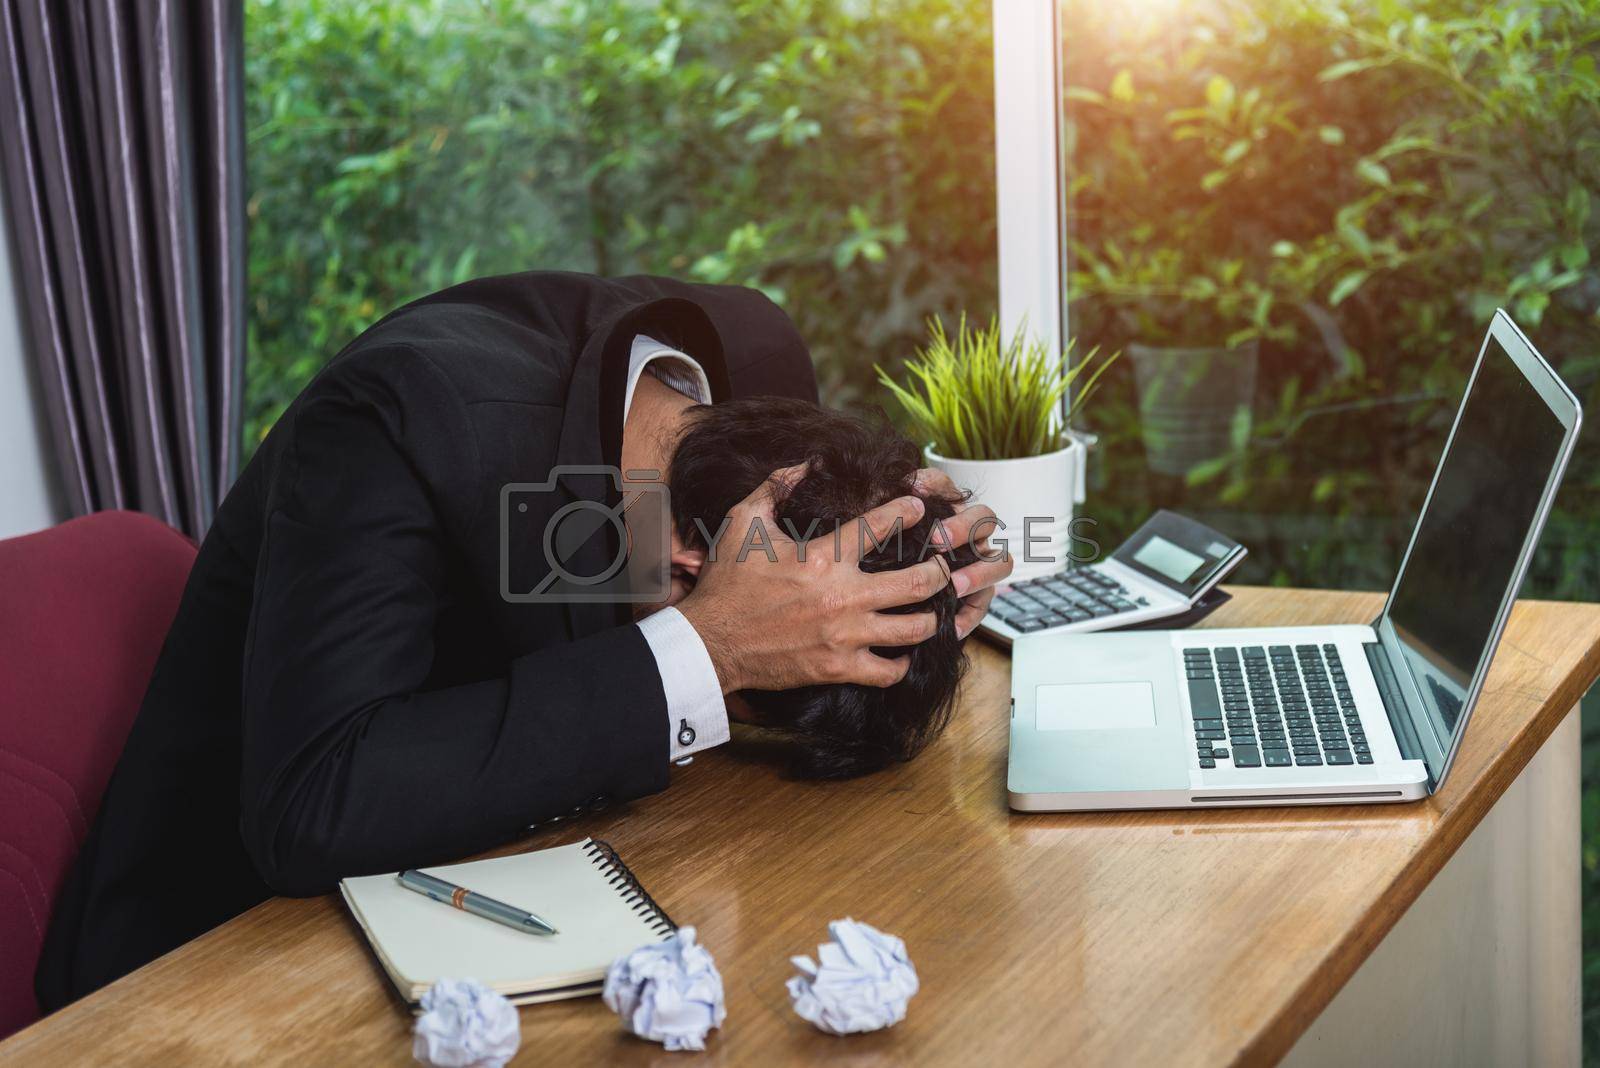 Royalty free image of Business man stress, deadline fault fail problems by Sorapop